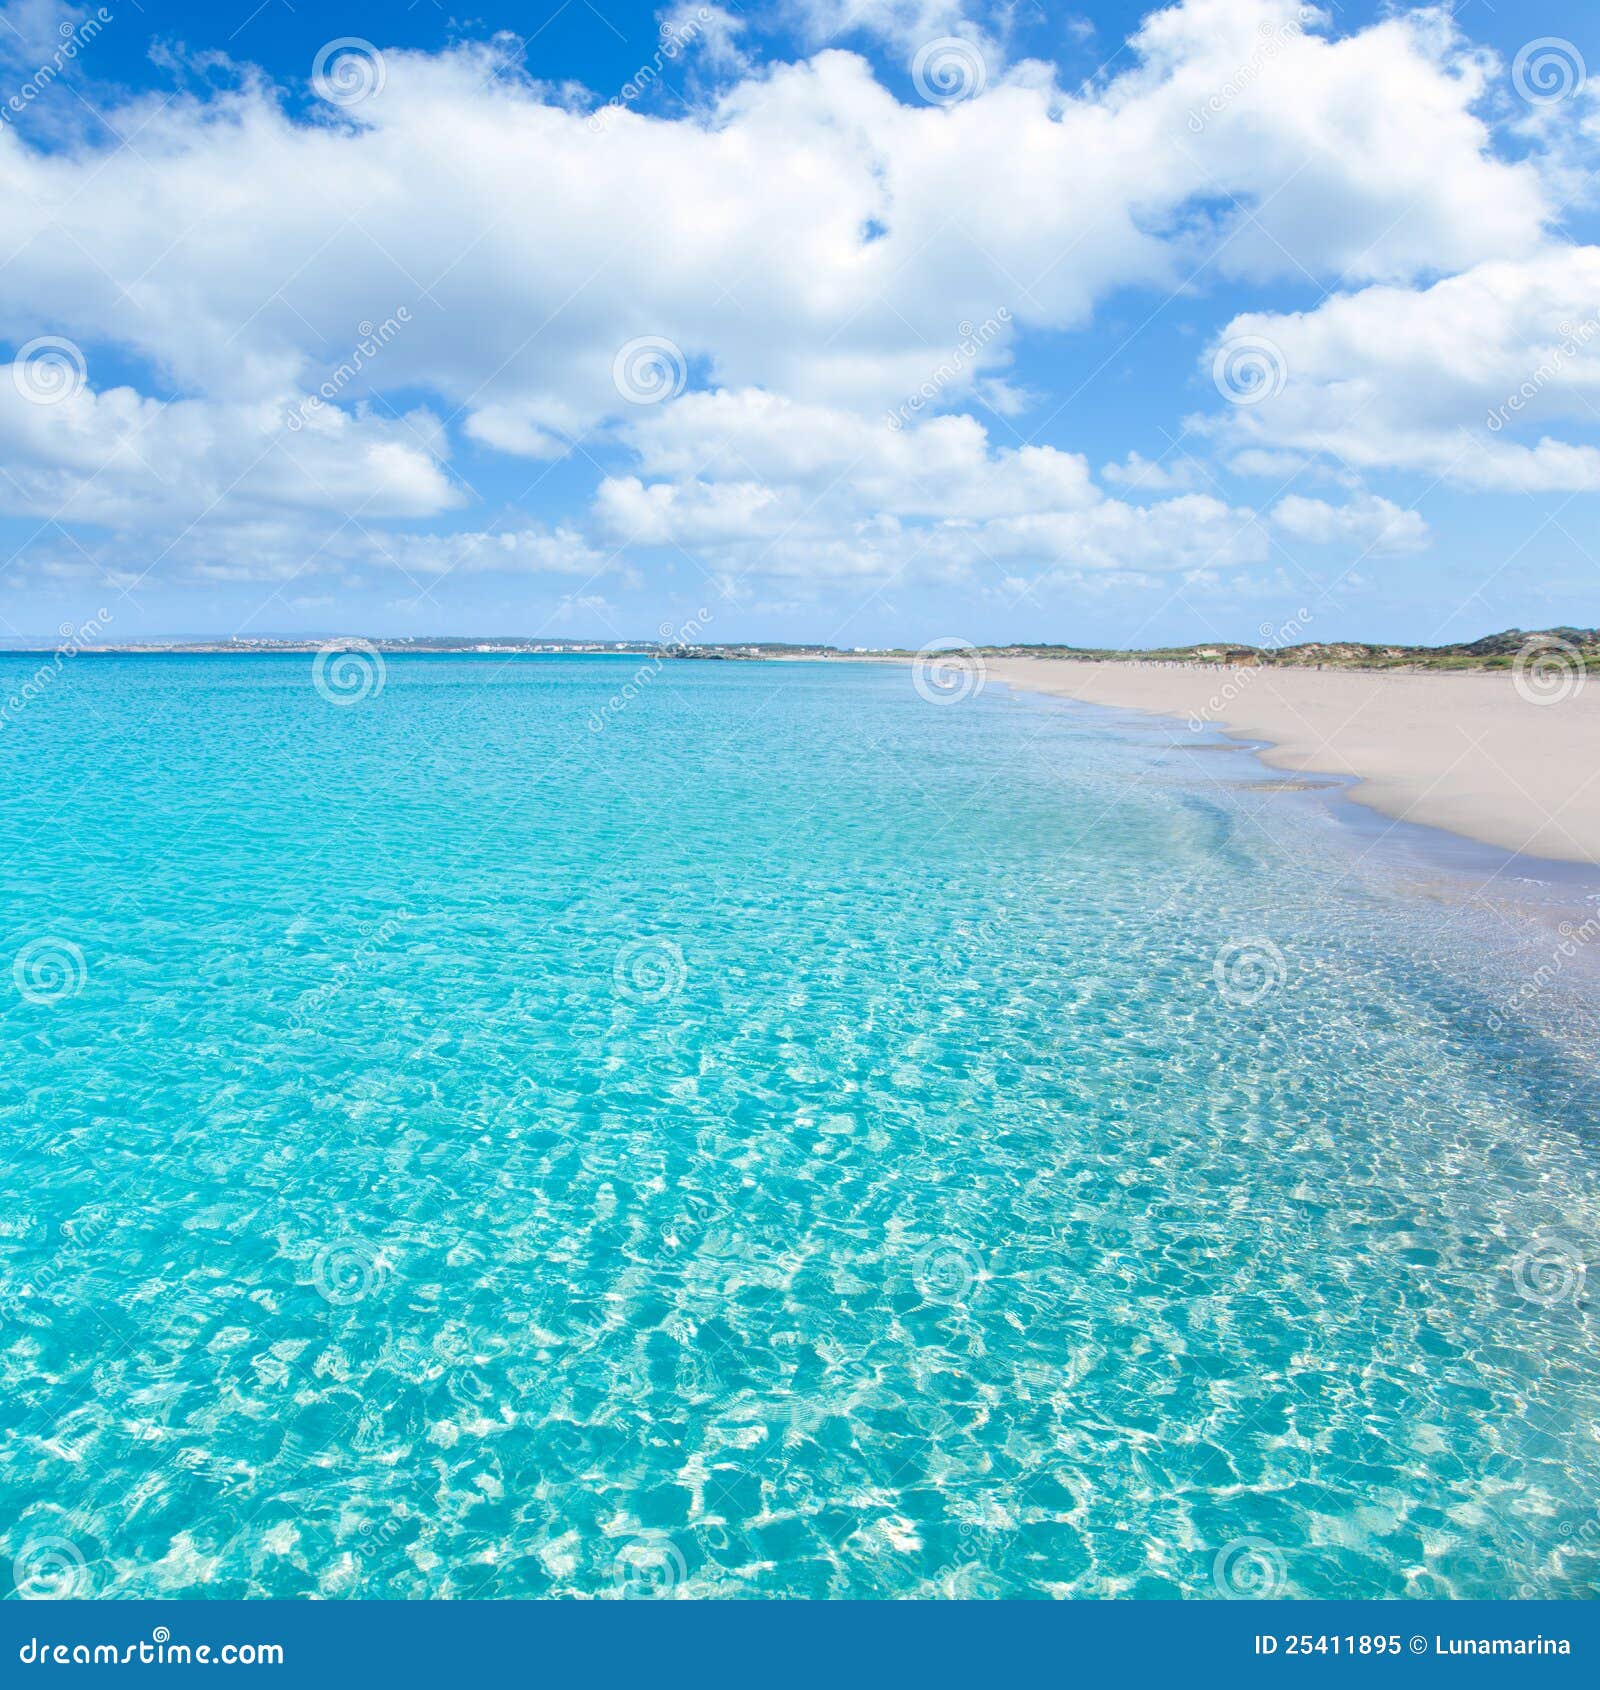 Formentera Llevant Tanga Turquoise Beach Stock Image - Image of scenic ...